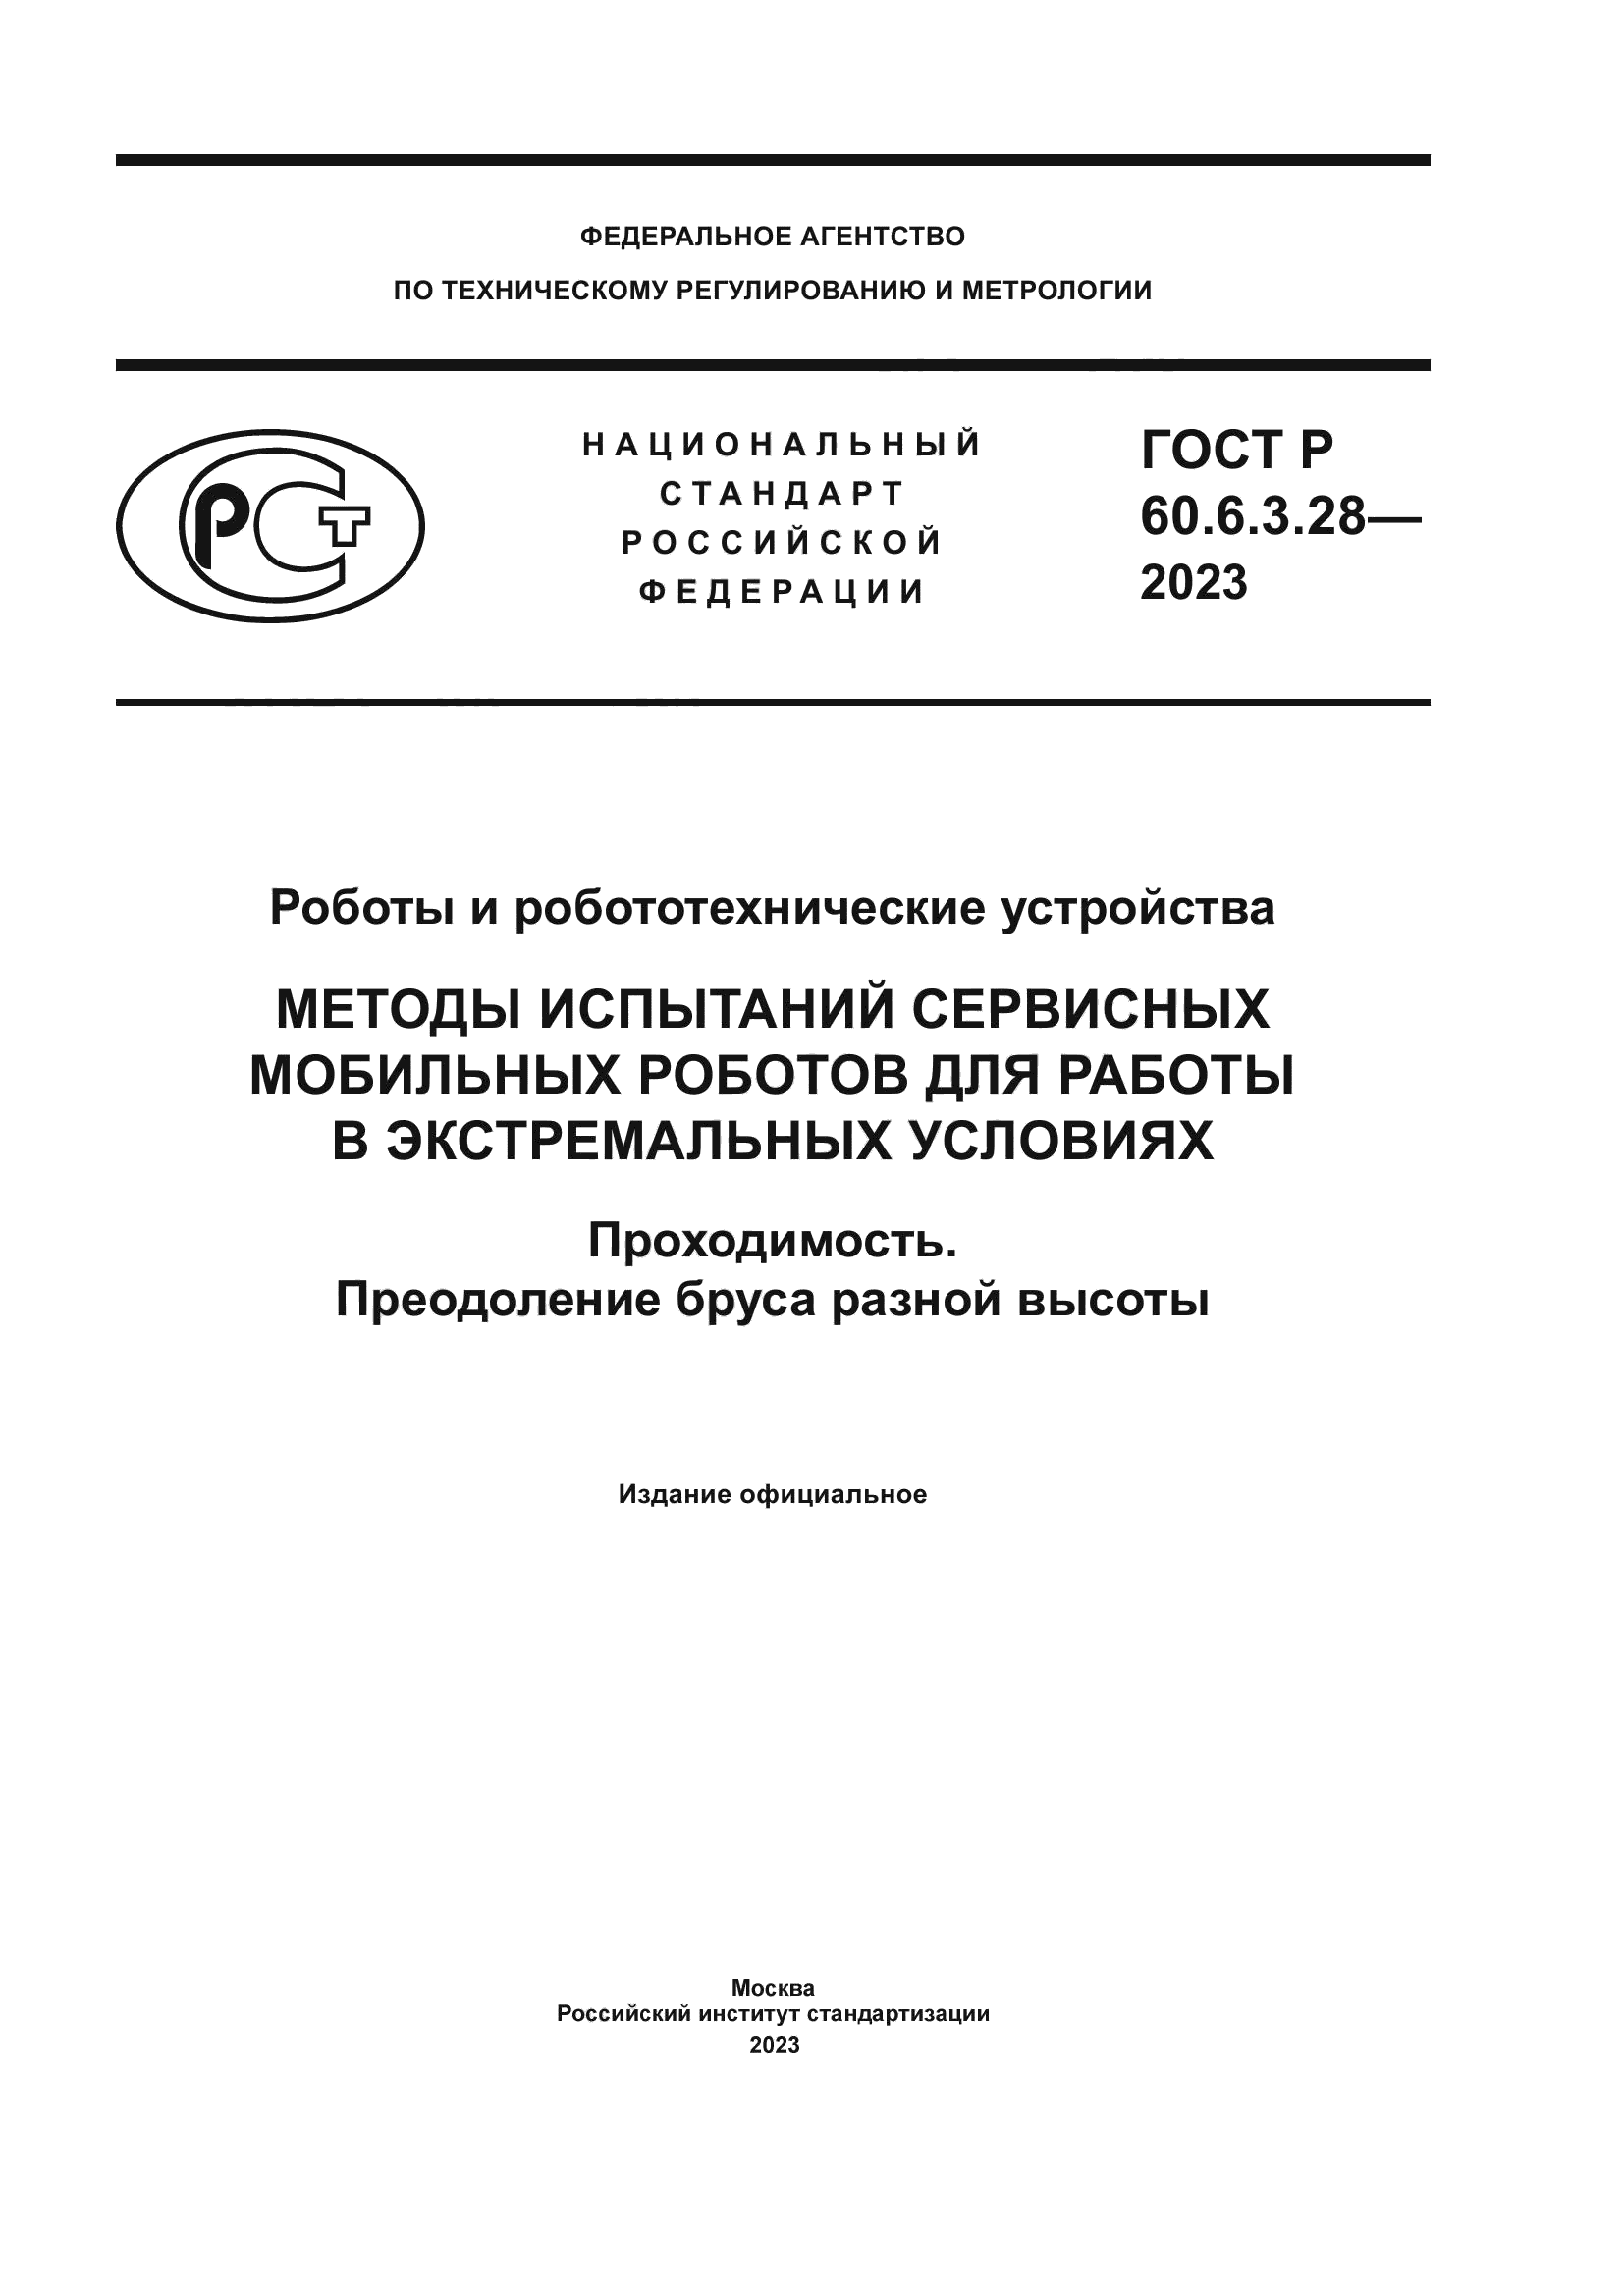 ГОСТ Р 60.6.3.28-2023